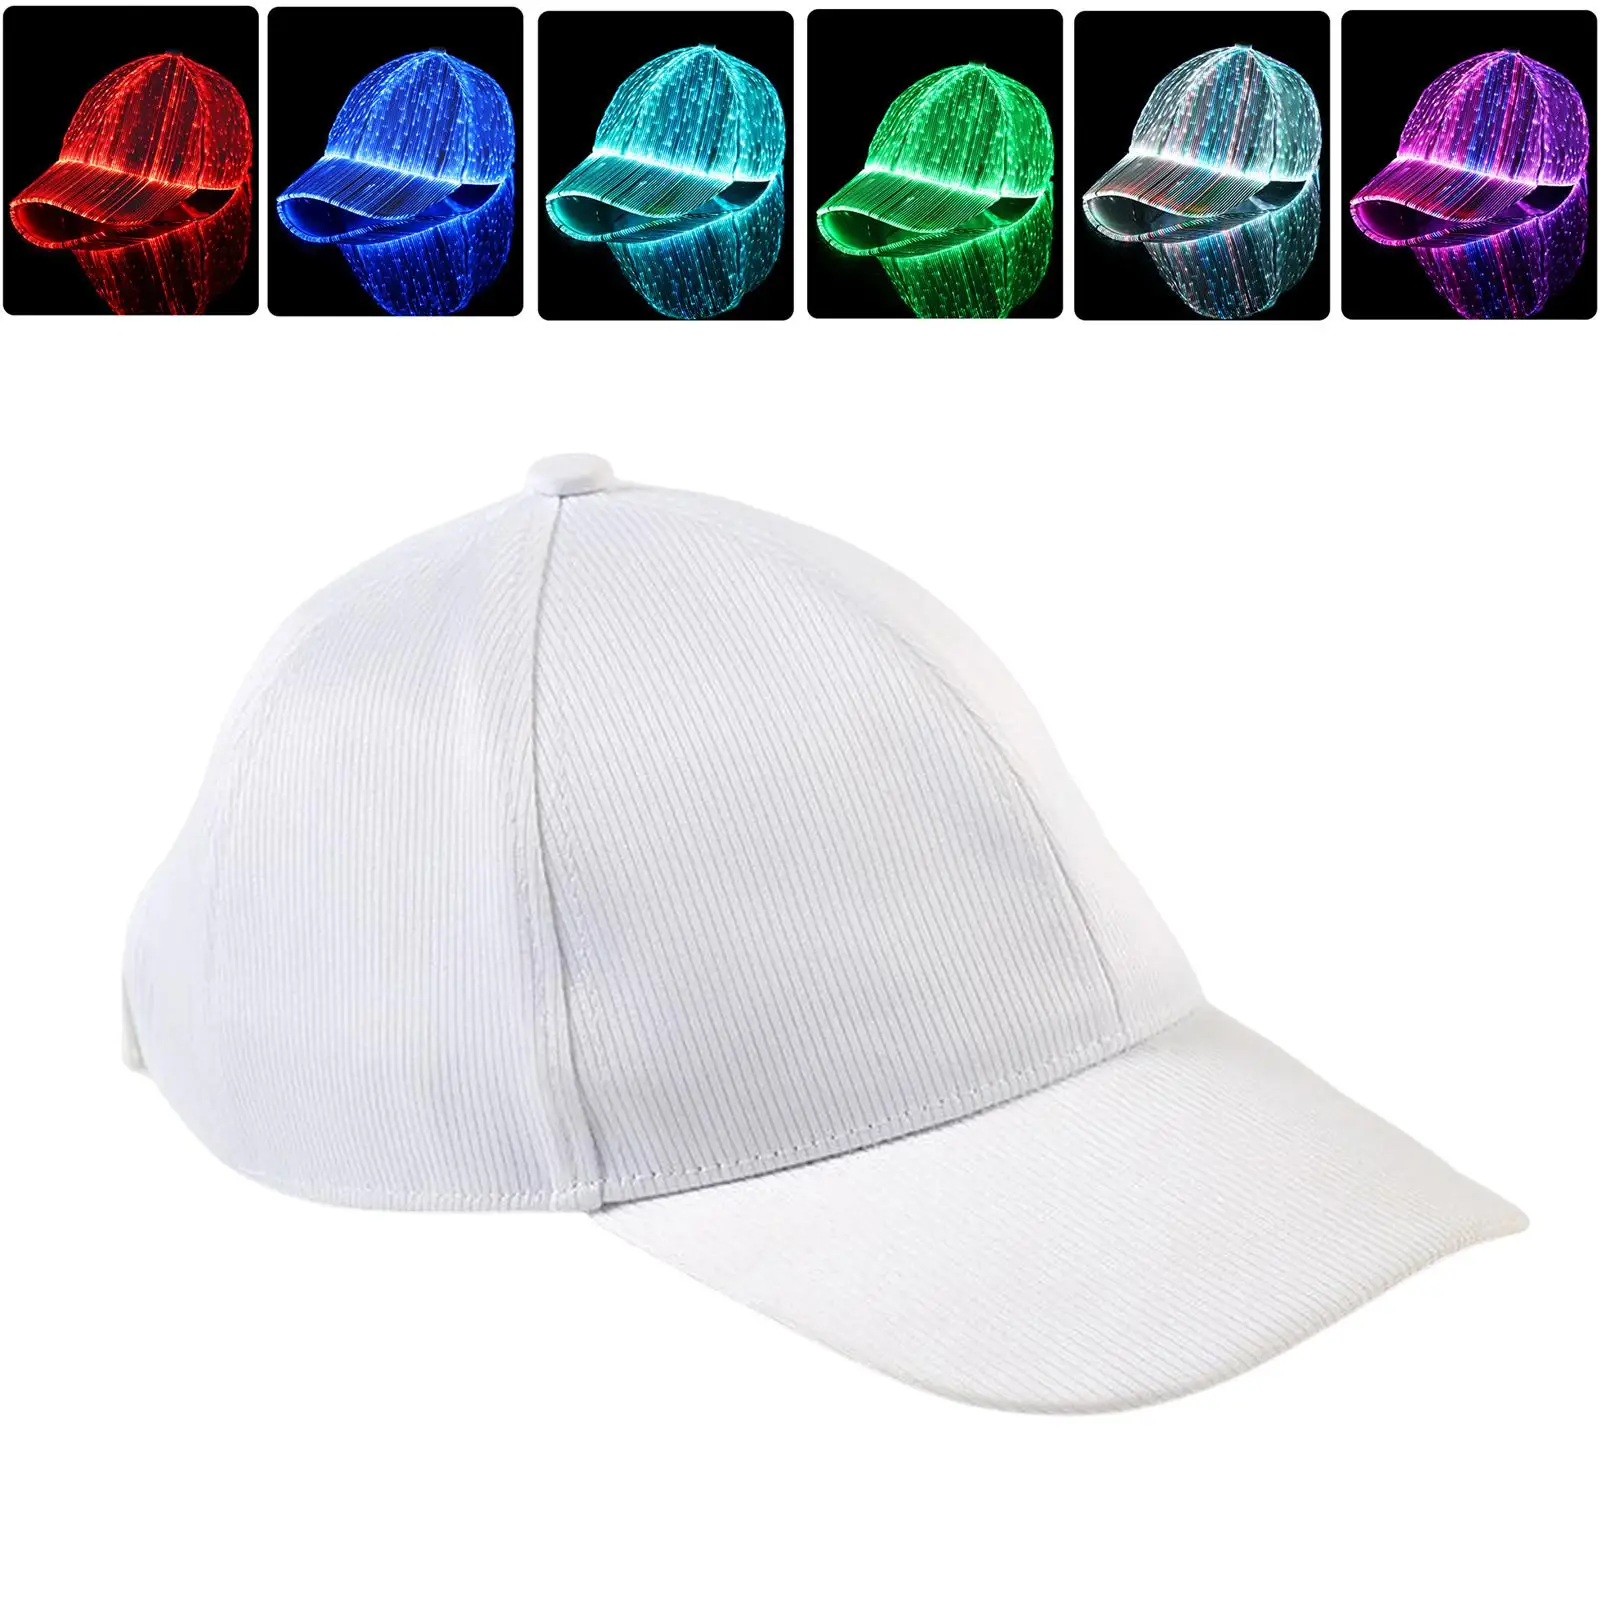 LED Hat Light Baseball Caps Luminous Party Hat Fiber Optic Caps for Men Party Supplies